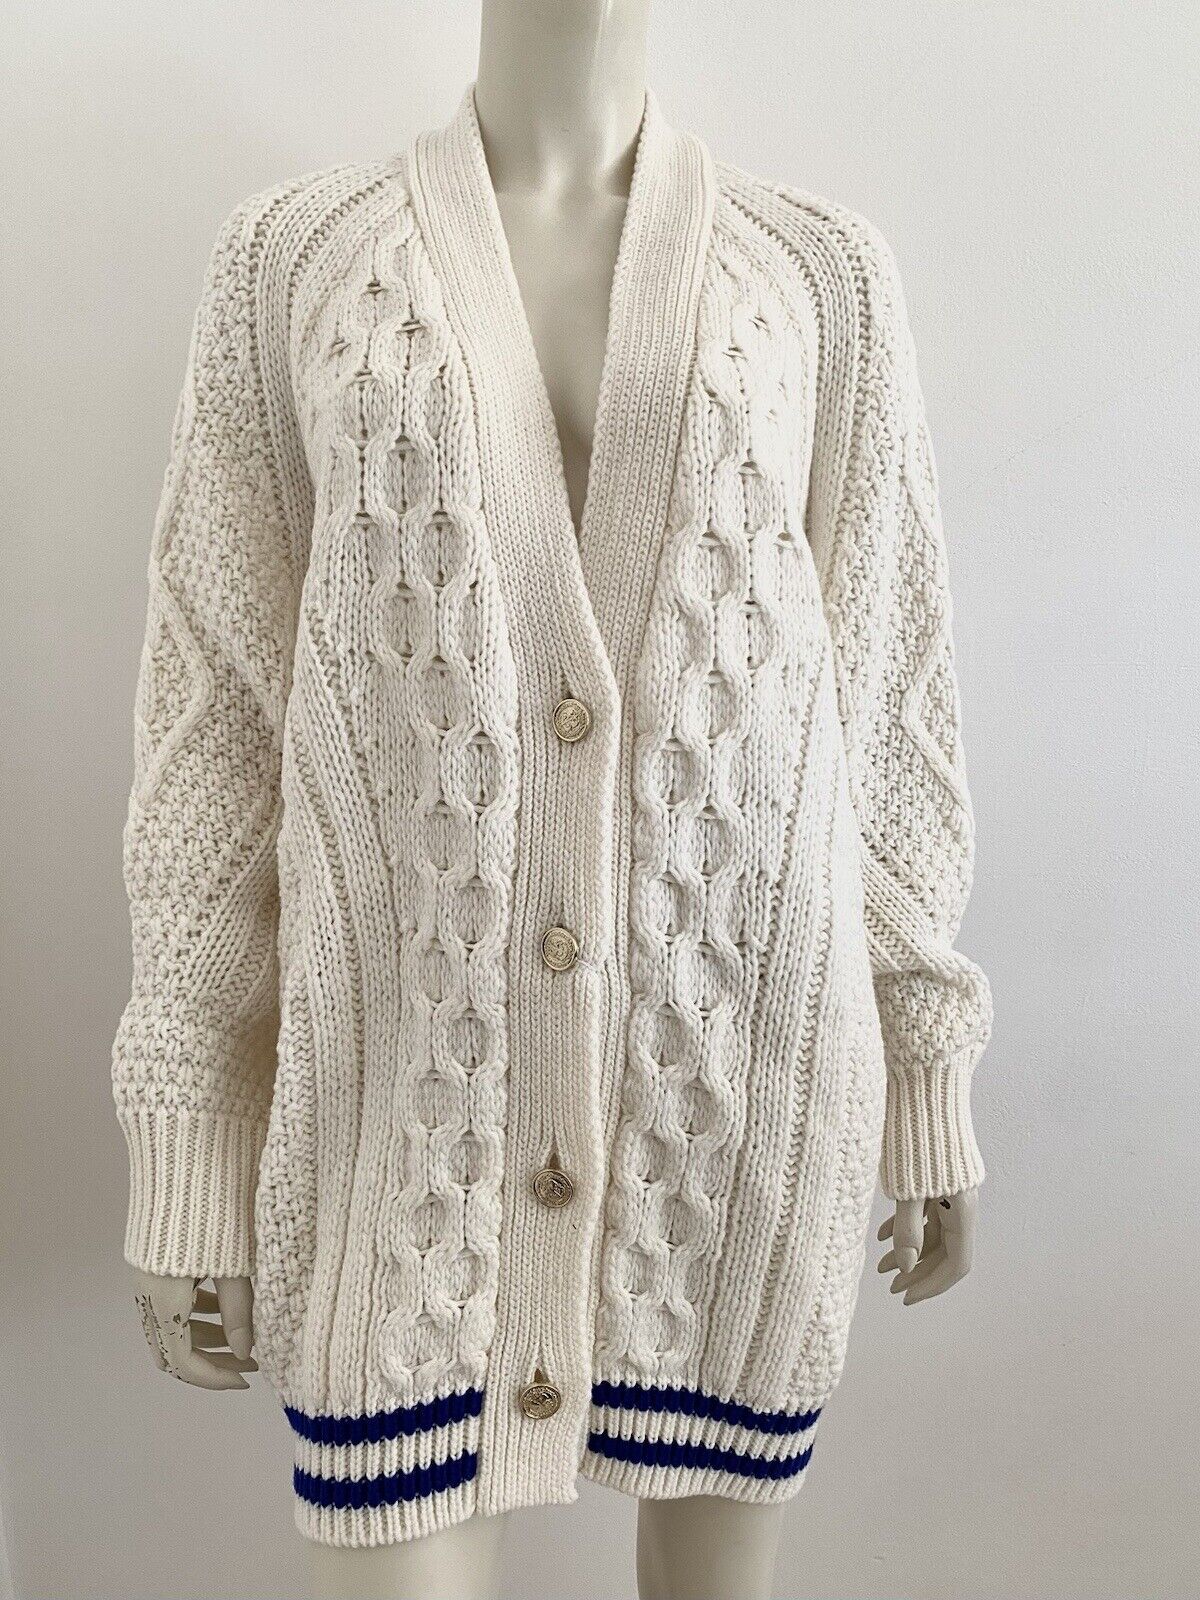 Image of MARINA RINALDIBy MAX MARA Cardigan Lana Tticot Wool Cardigan Sweater M size